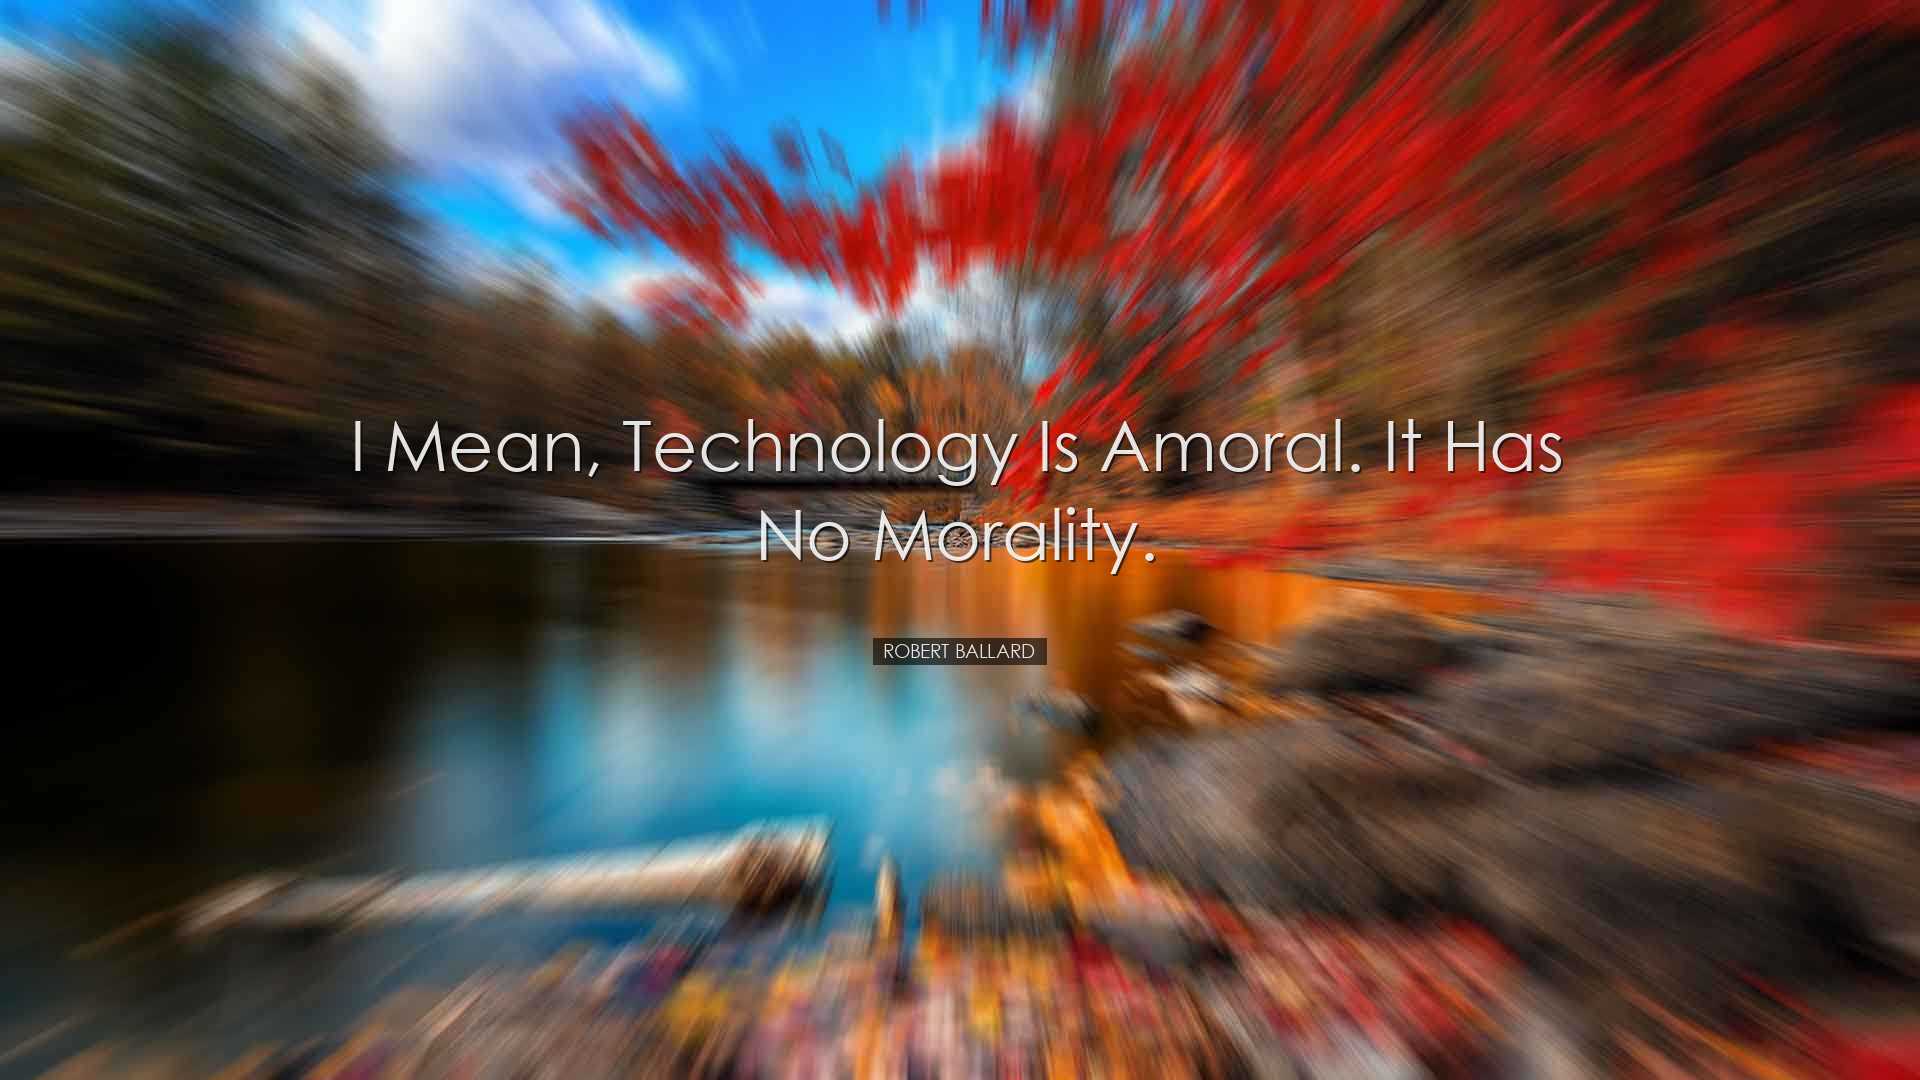 I mean, technology is amoral. It has no morality. - Robert Ballard